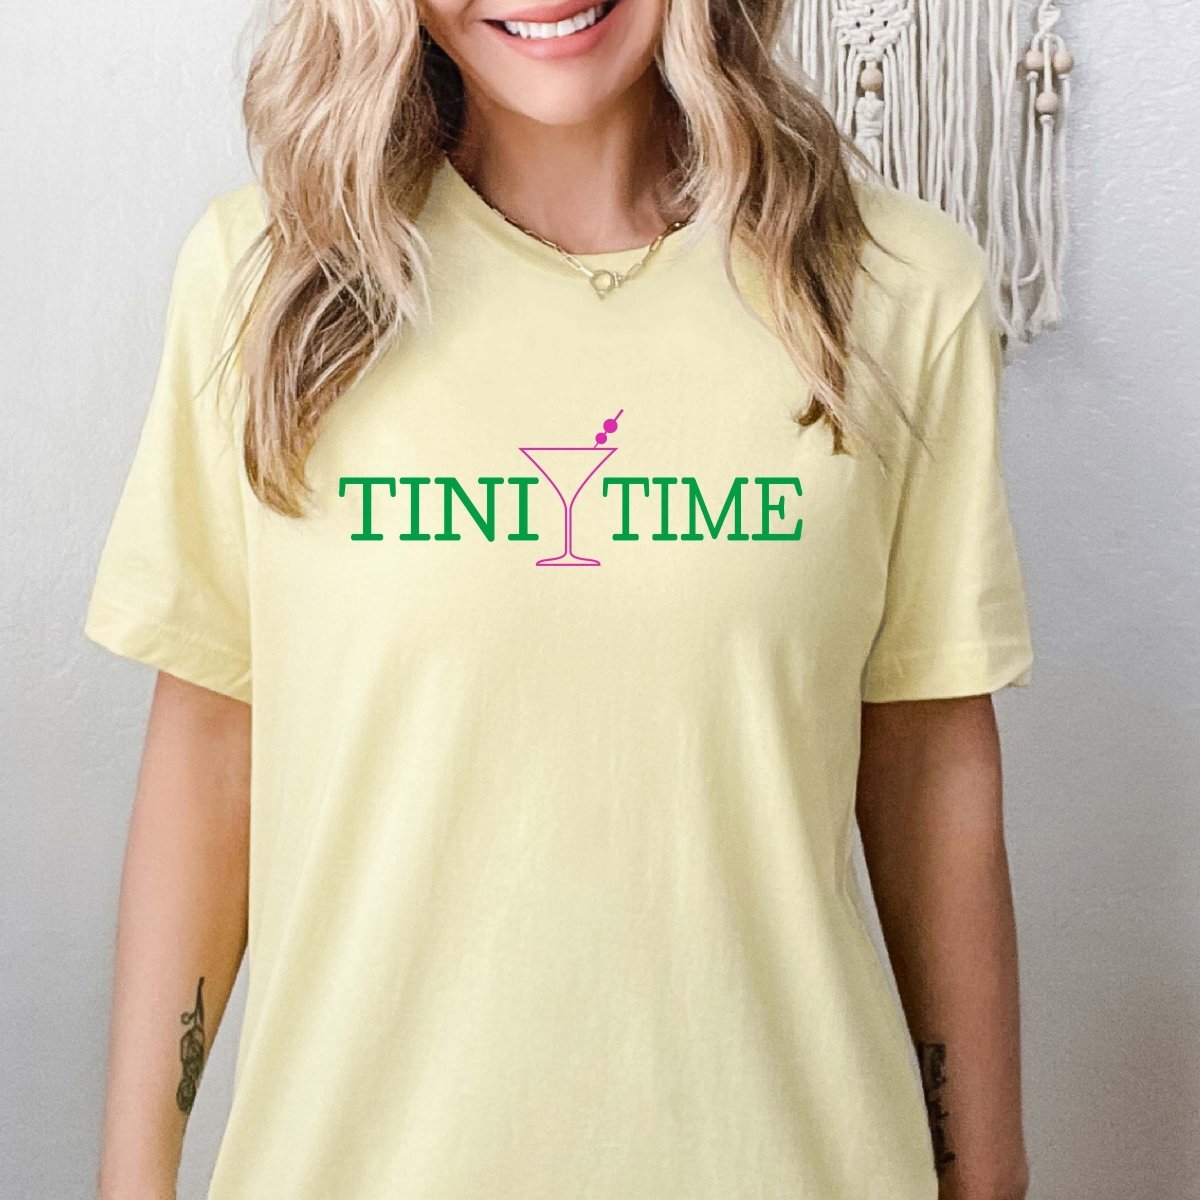 Tini Time tee - Limeberry Designs